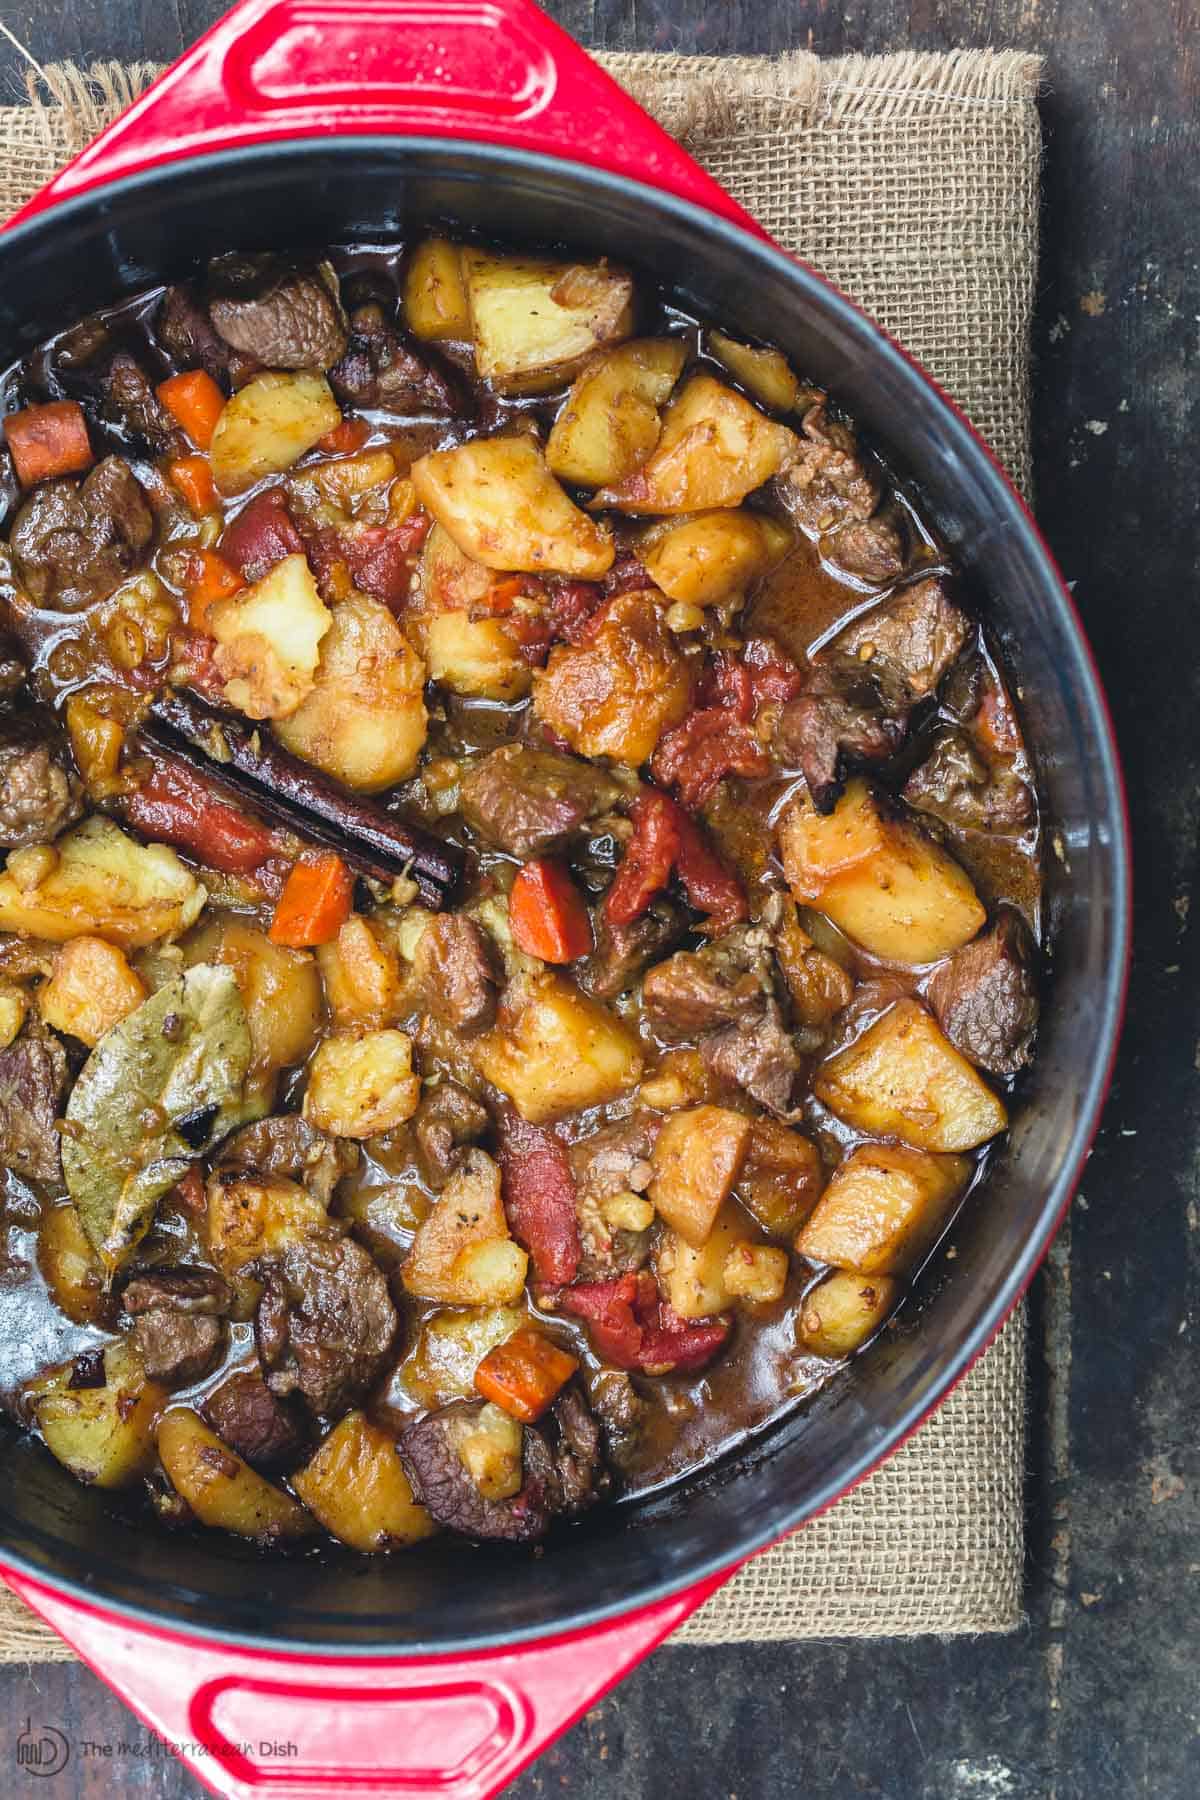 https://www.themediterraneandish.com/wp-content/uploads/2019/10/Moroccan-lamb-stew-recipe-9.jpg